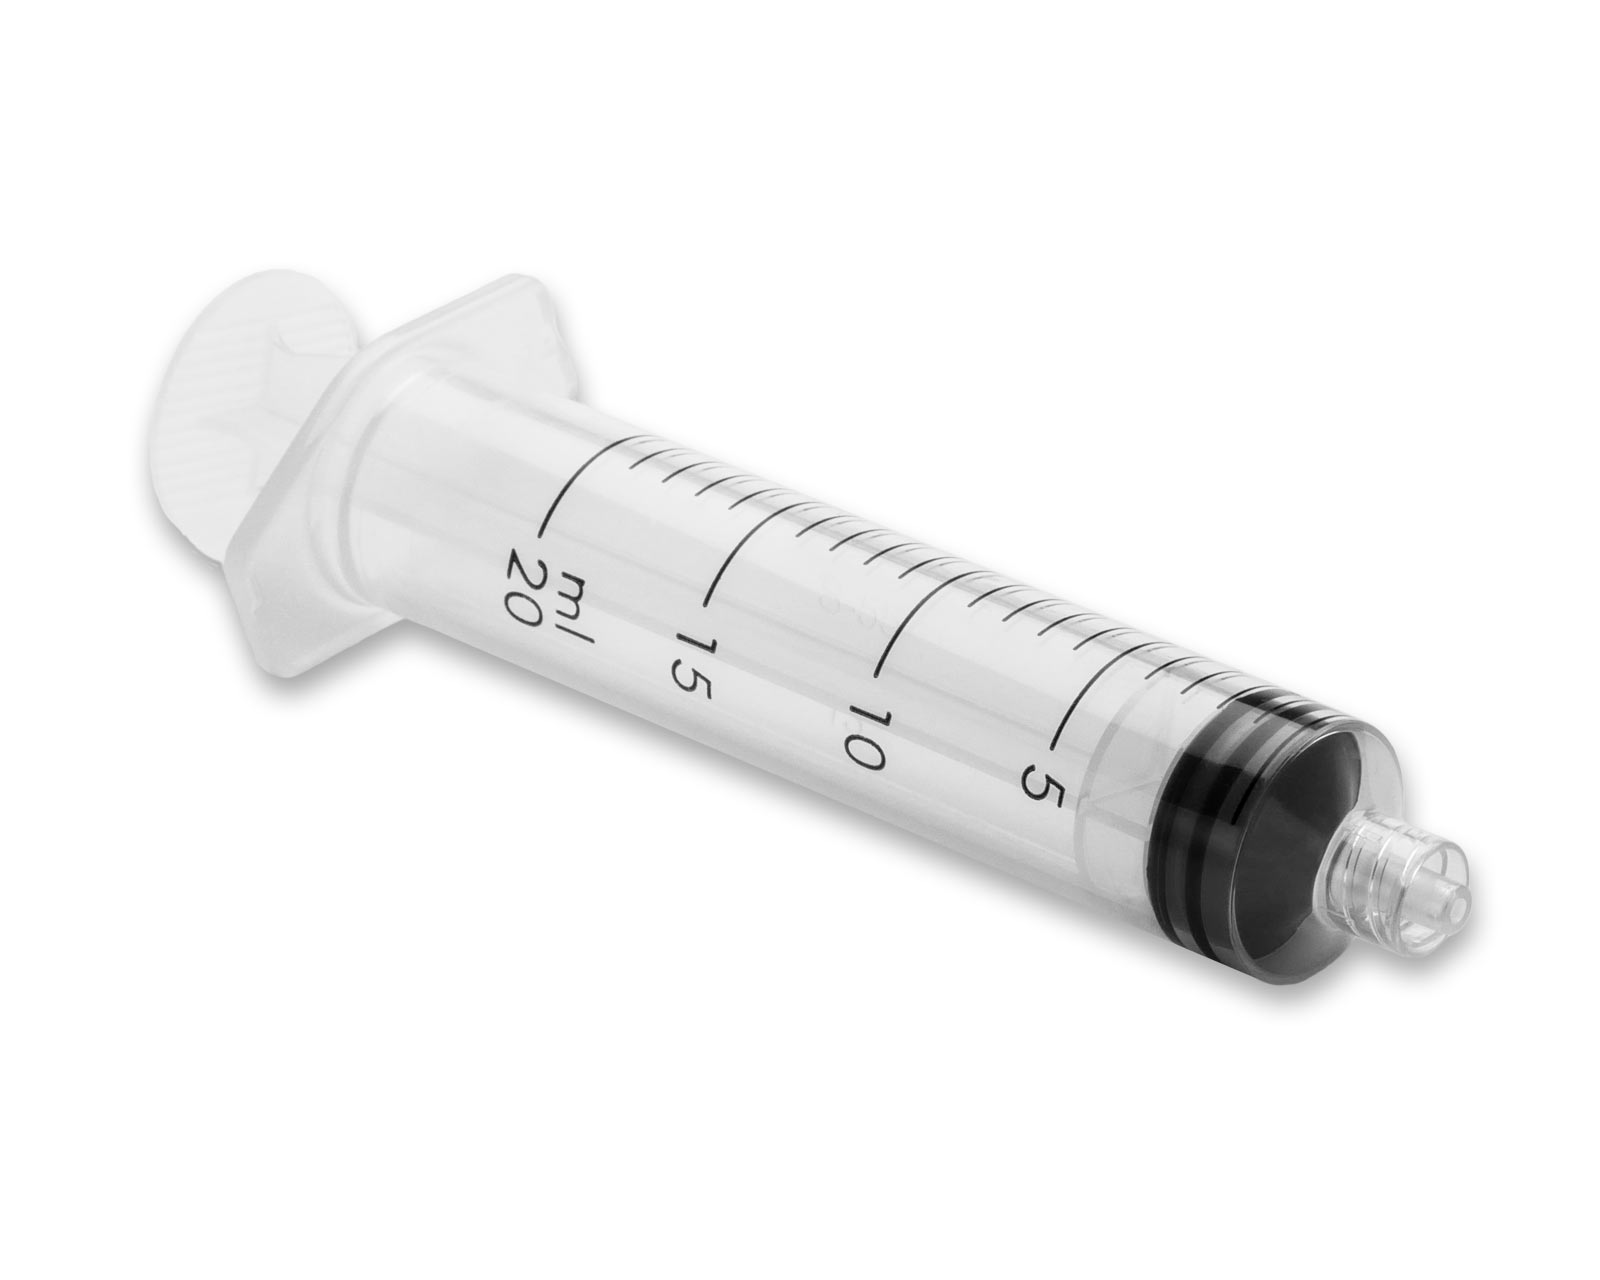 Softmatik refill syringe with luer lock fitting